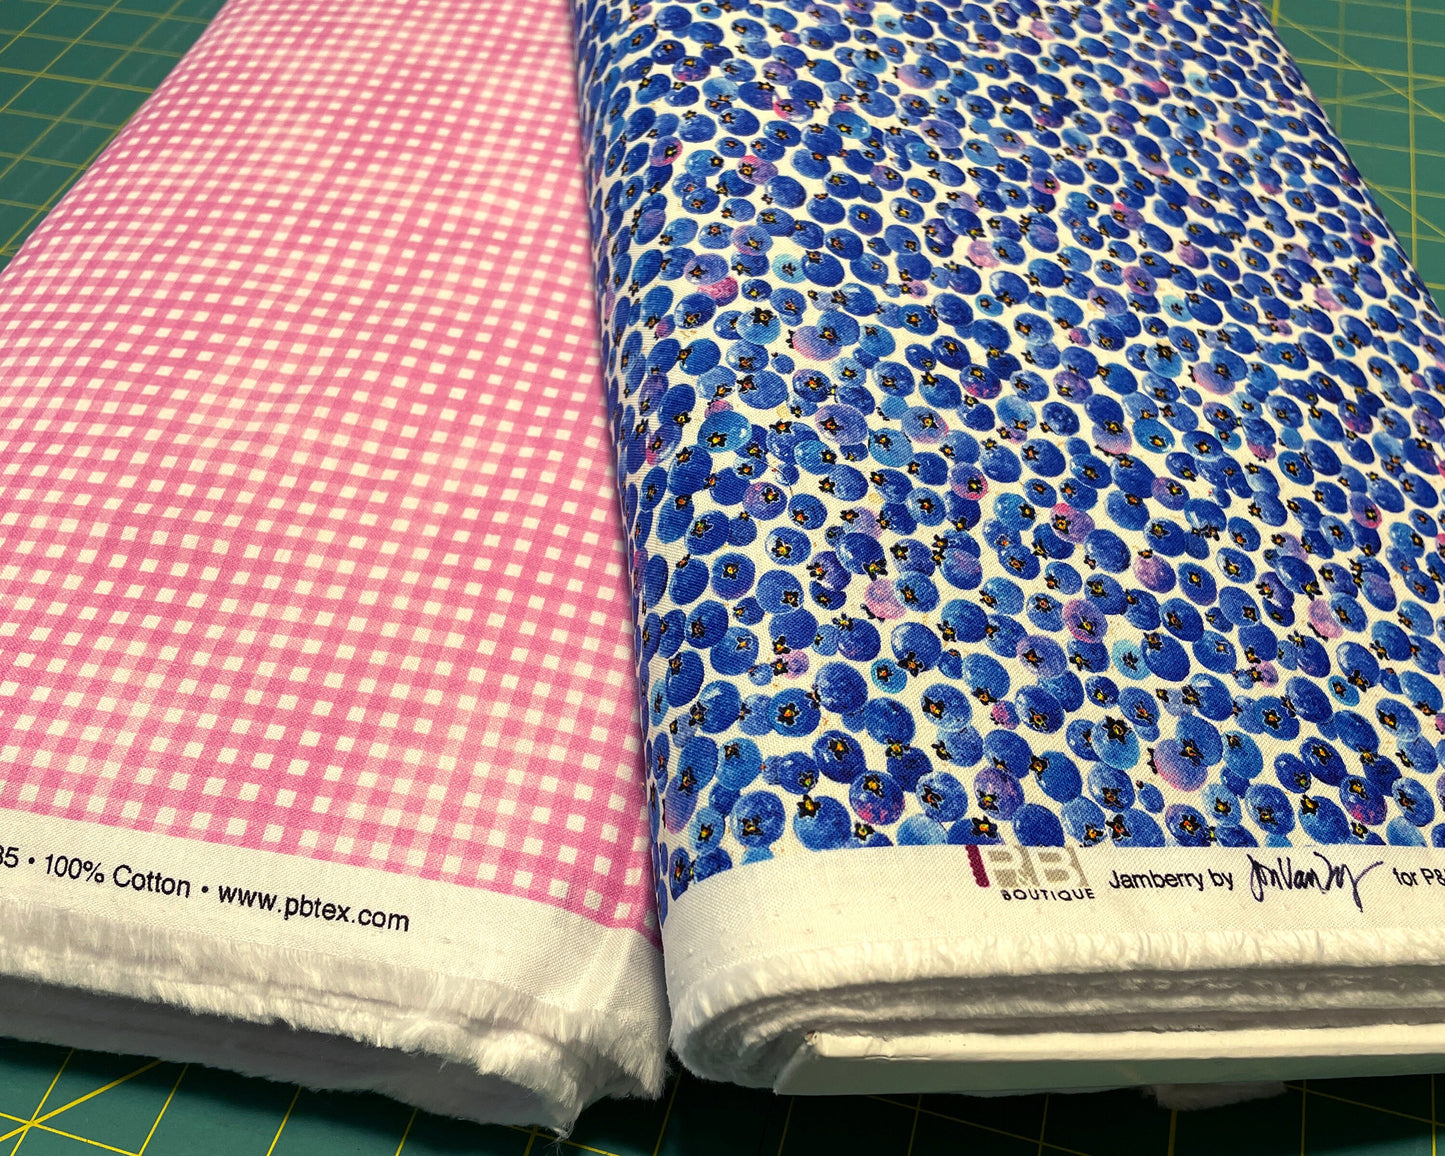 Fuchsia Gingham Fabric - P&B Textiles - Sorbet - 100% Cotton Fabric - Petite Check pattern Pink Tonal Gingham material - Ships NEXT DAY